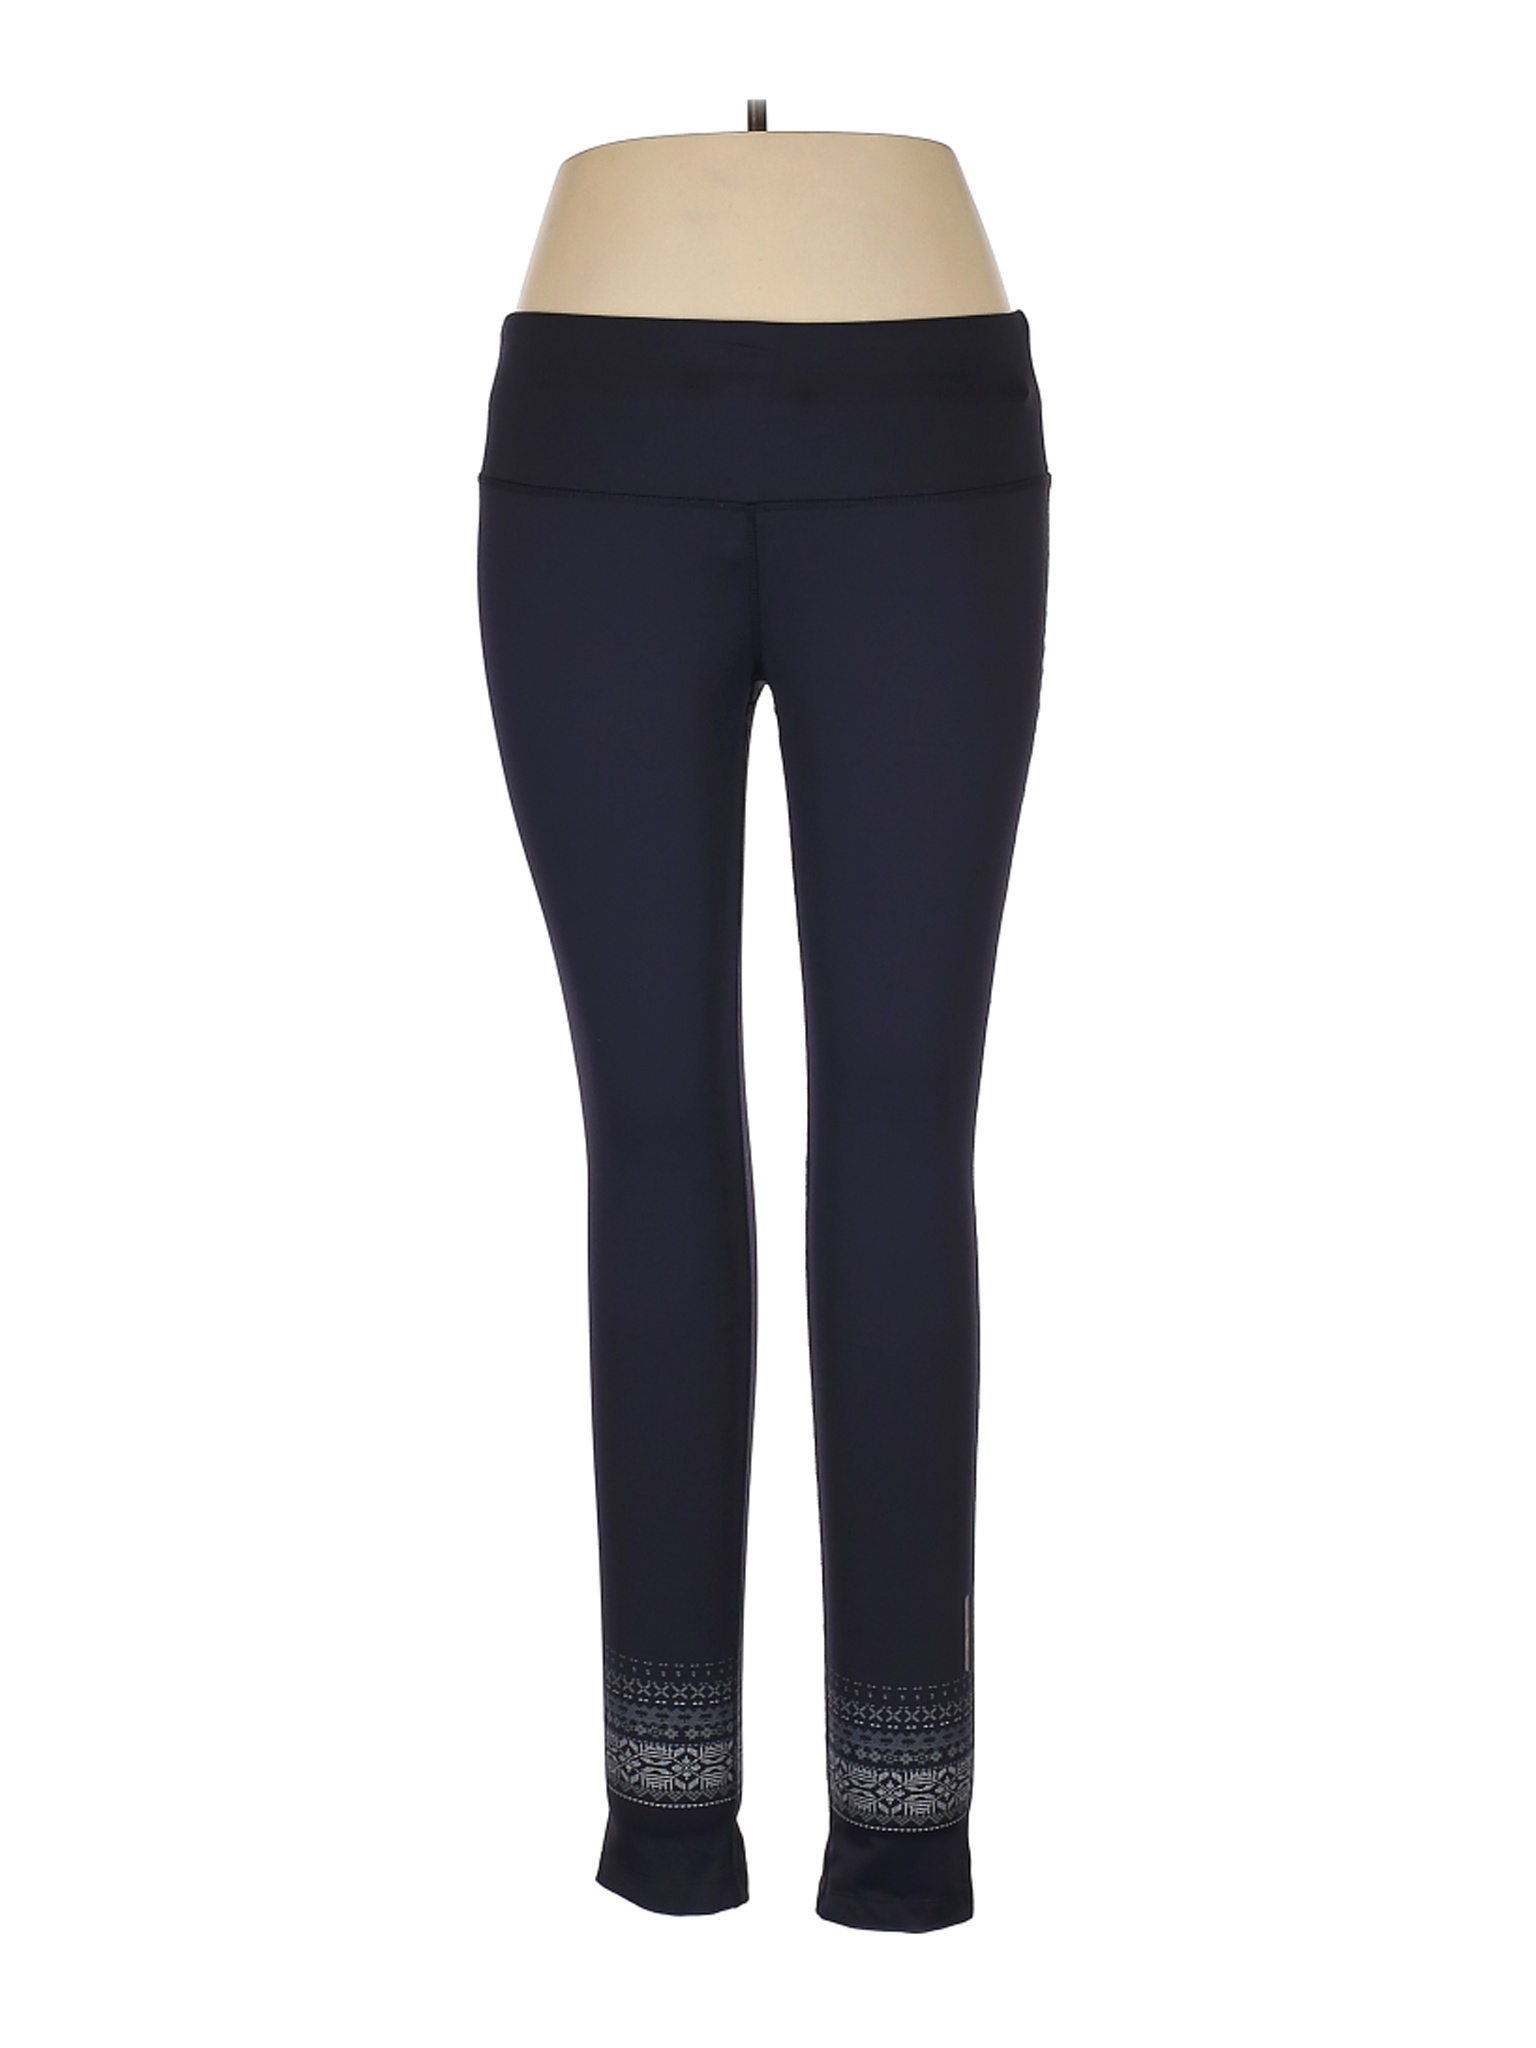 Mondetta Women Blue Yoga Pants XL | eBay